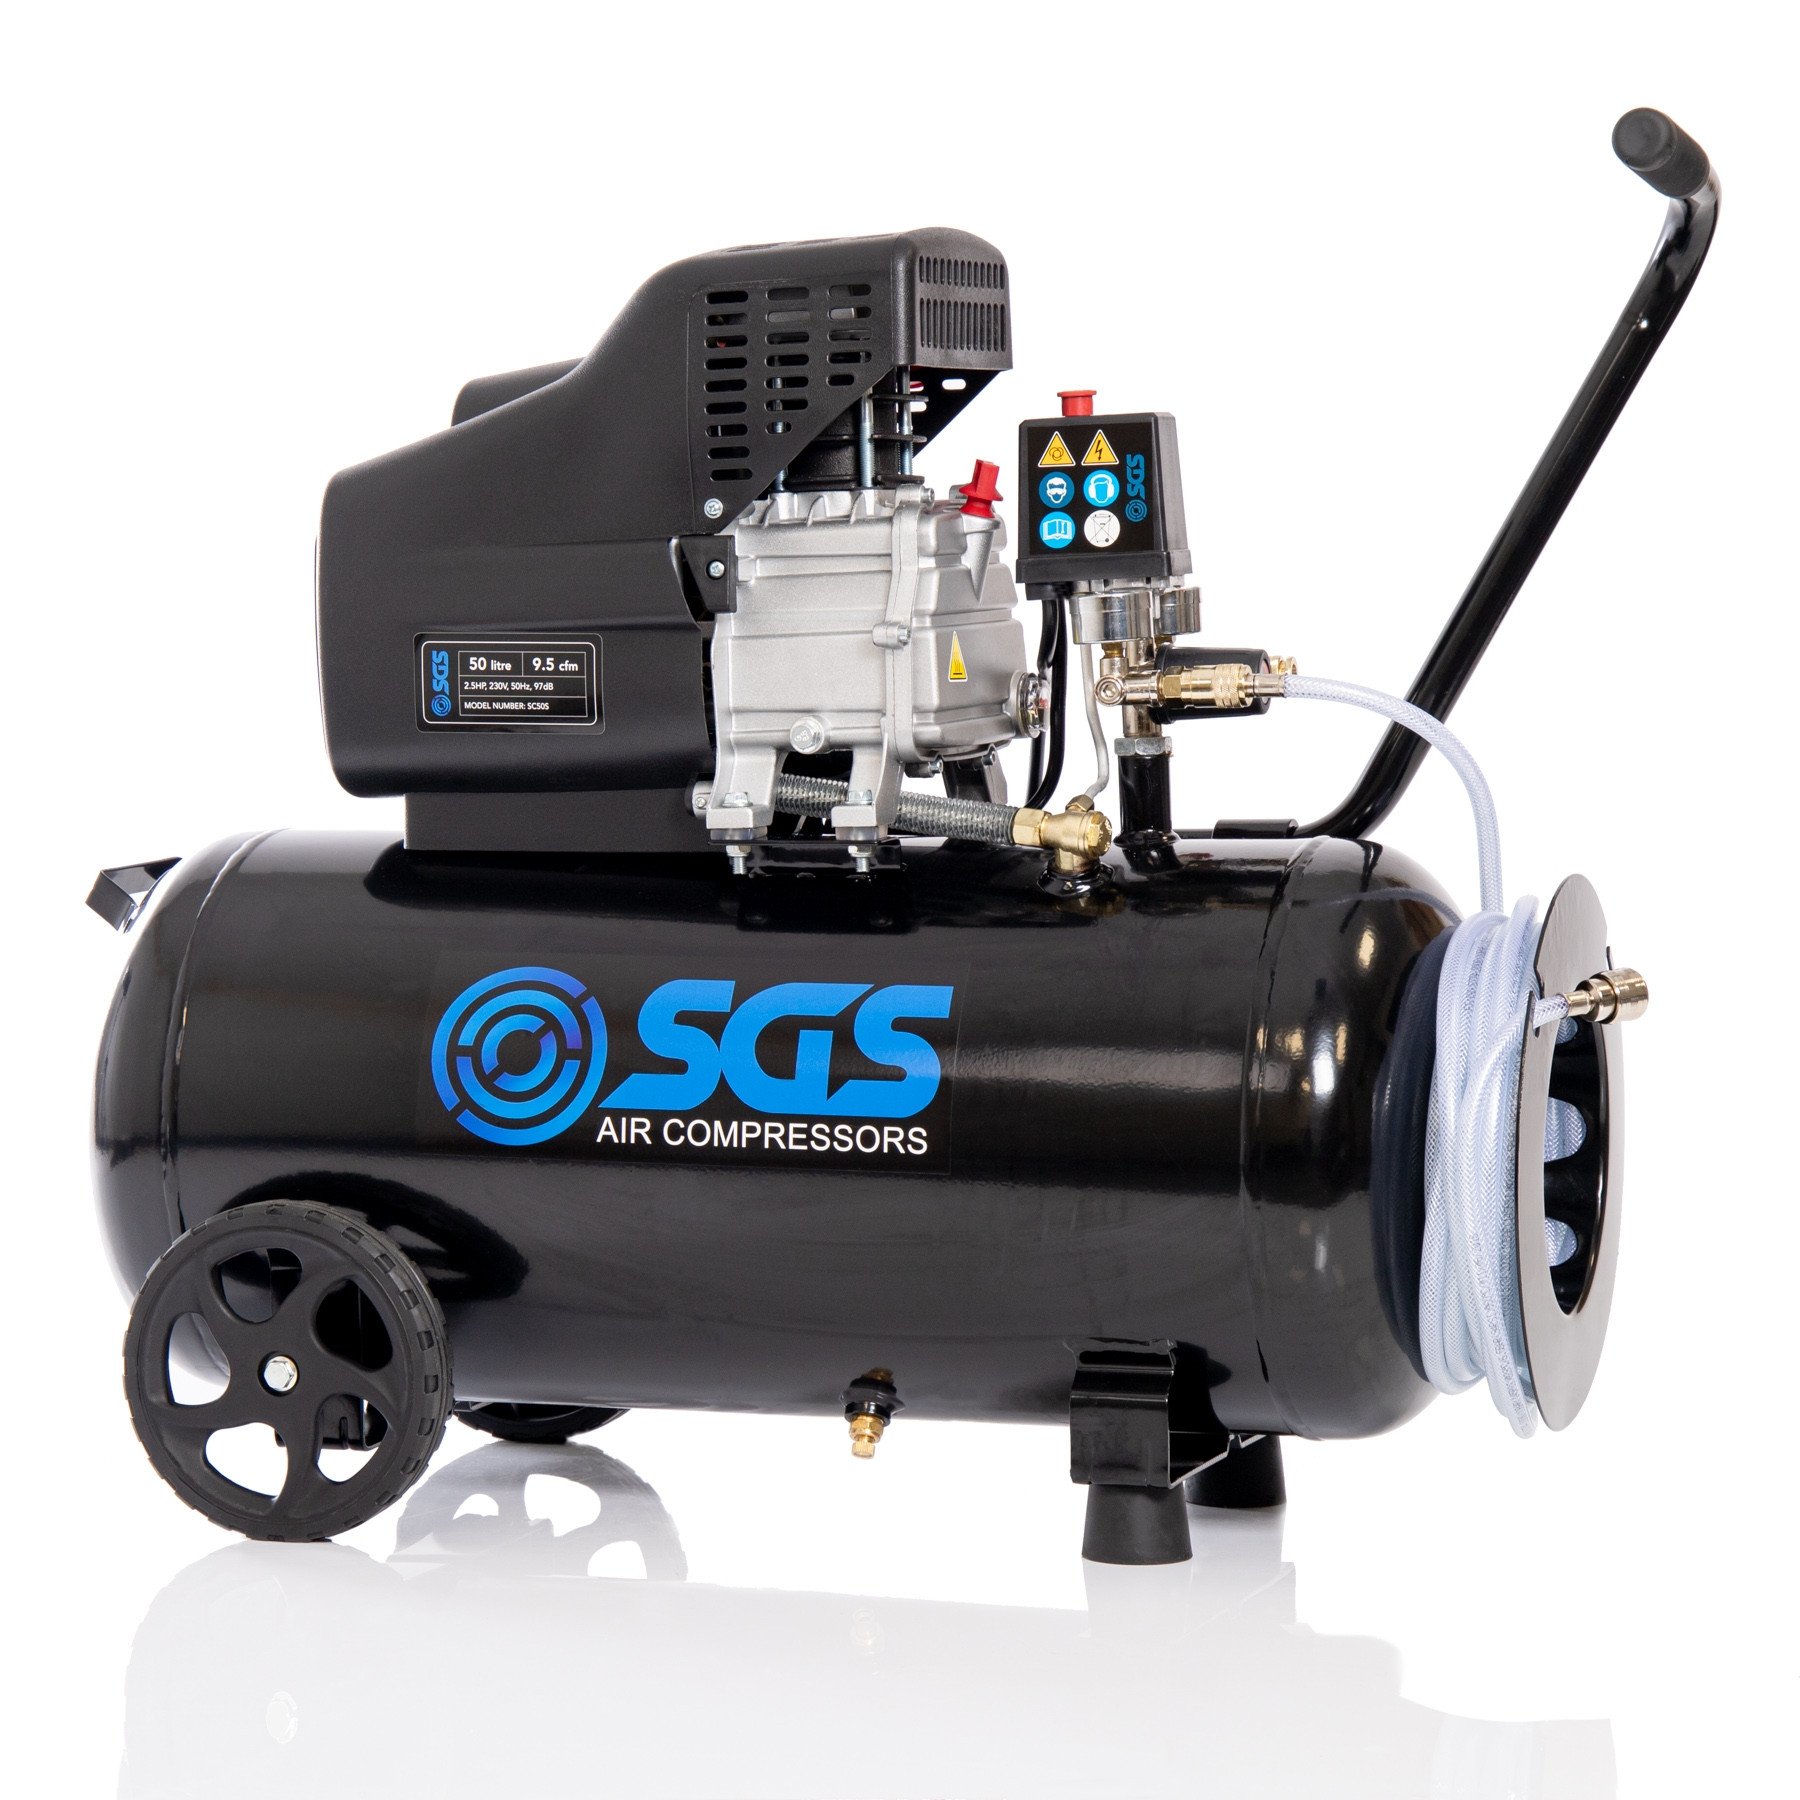 SGS 50升直接驱动空气压缩机与集成软管卷- 9.5CFM 2.5HP 50L